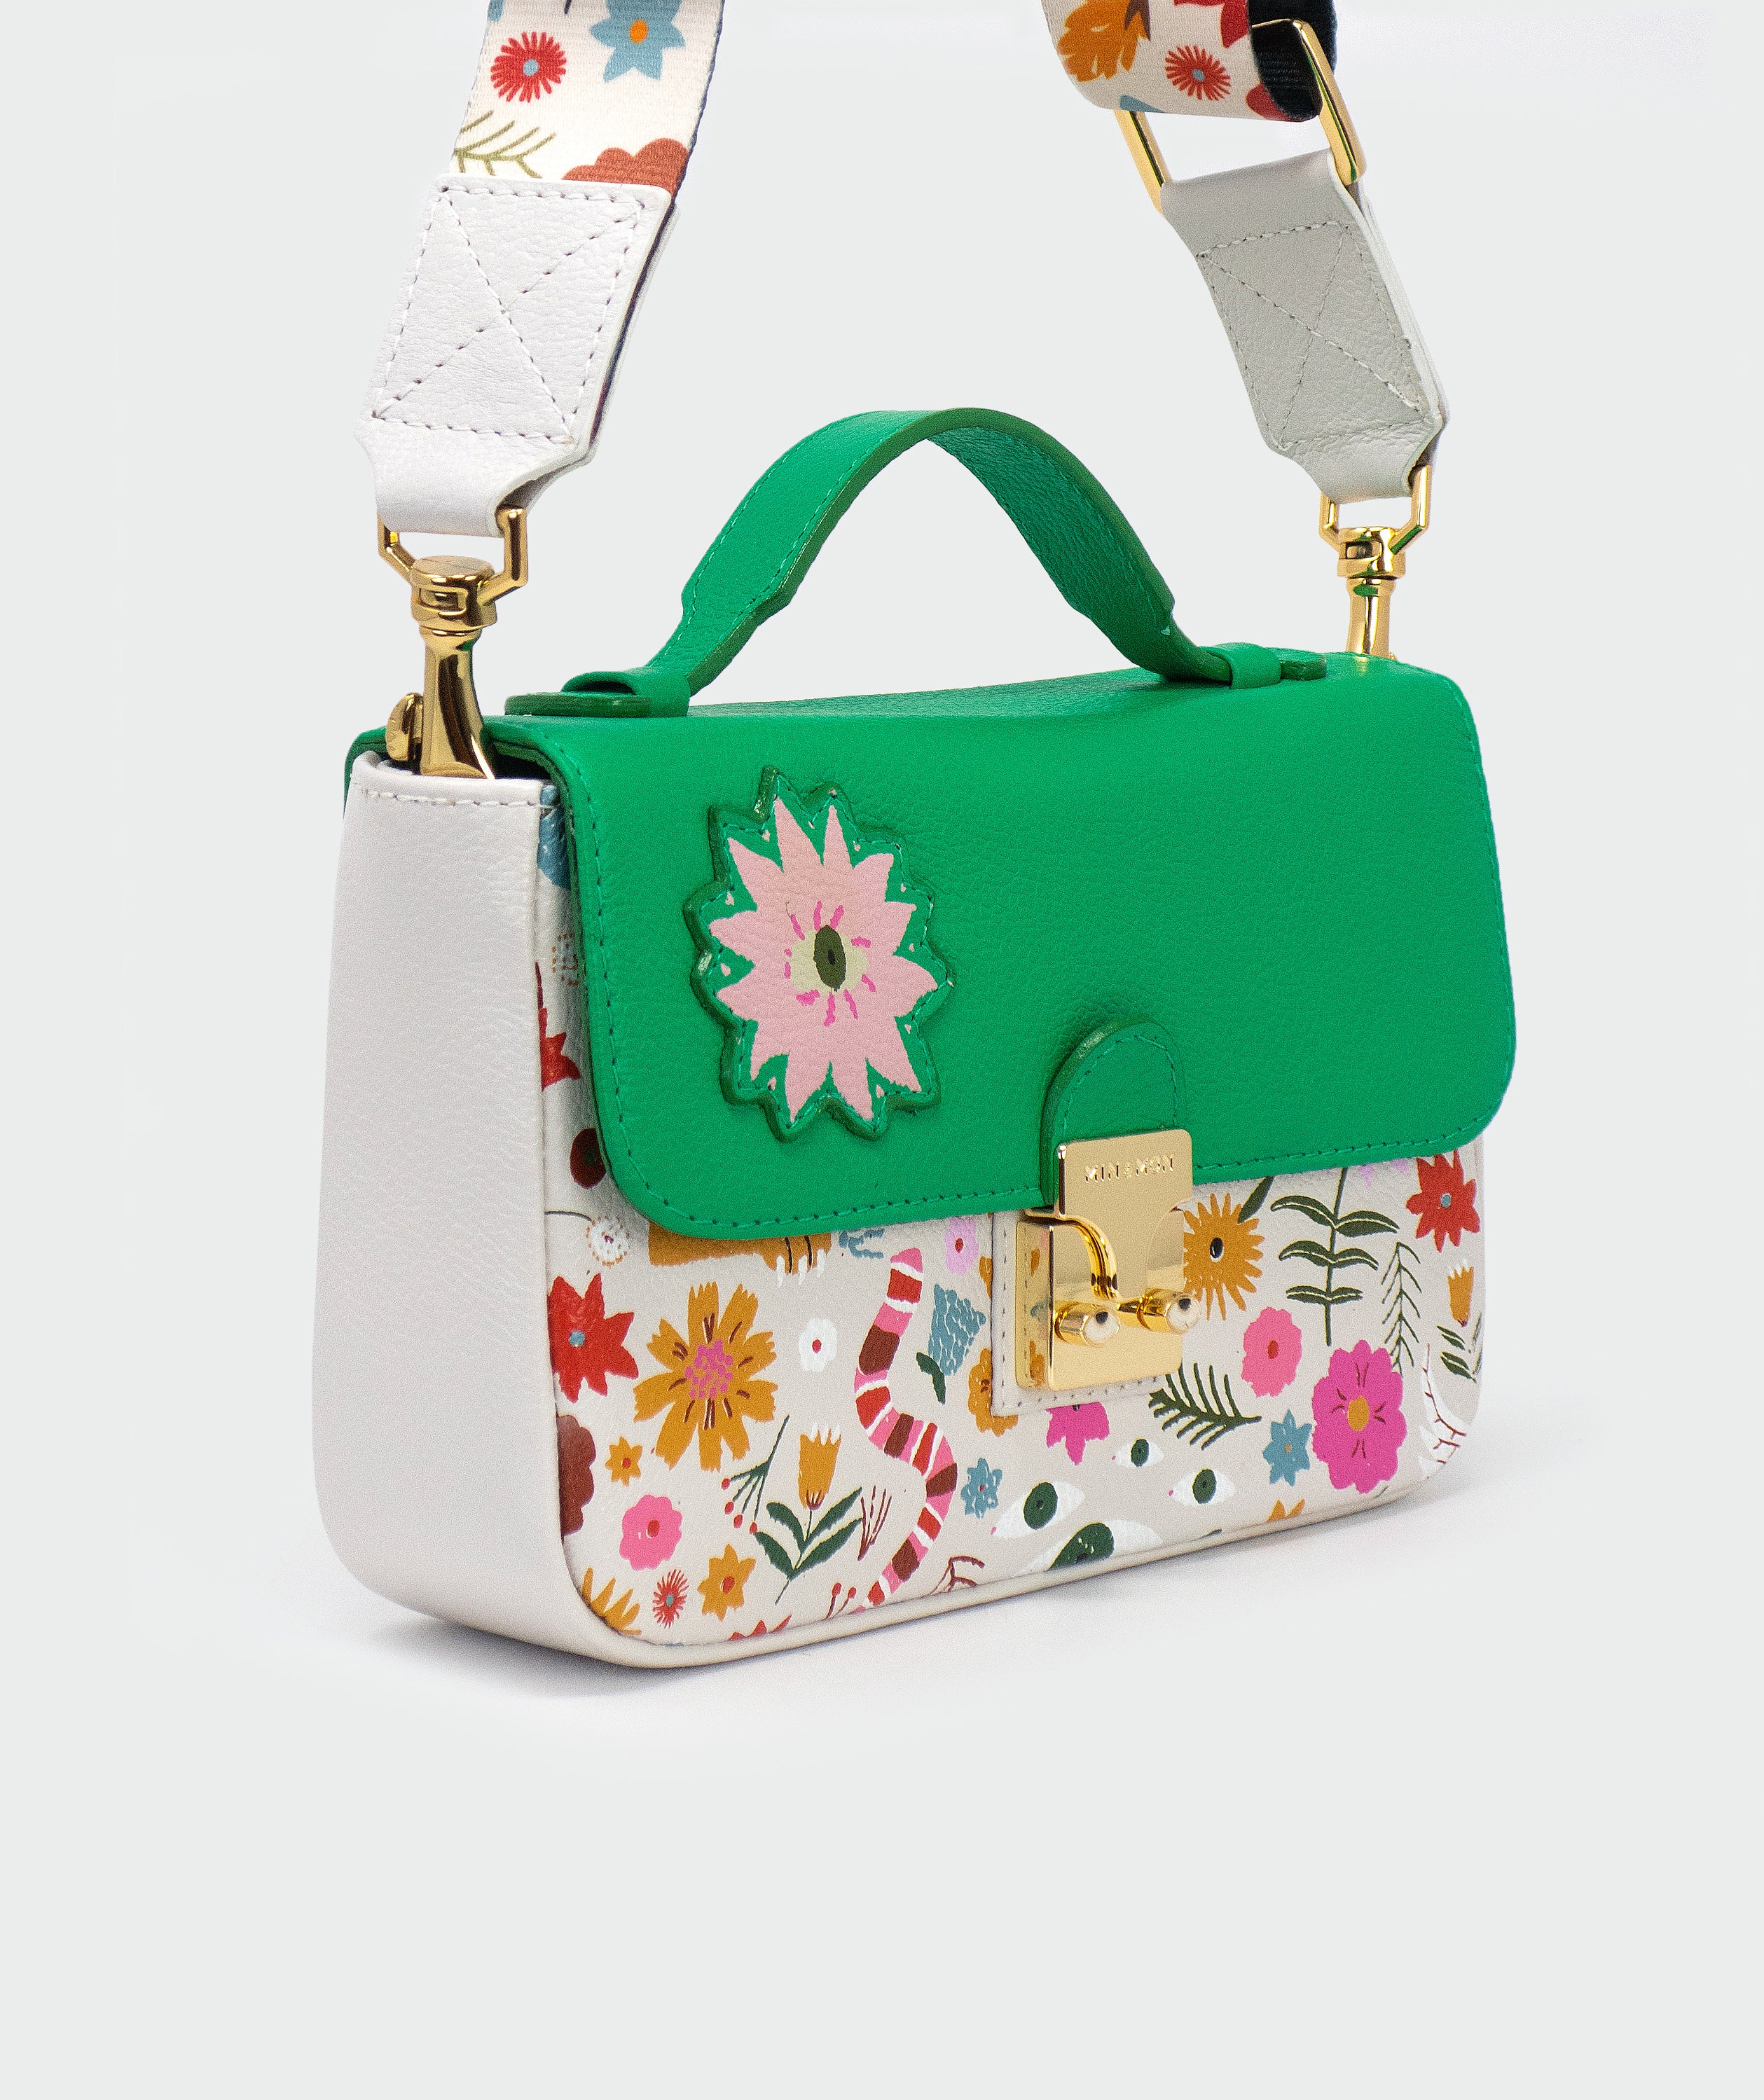 Amantis Crossbody Handbag - Cream, mint green - Creatures of the Future - Flowers Print - Side view